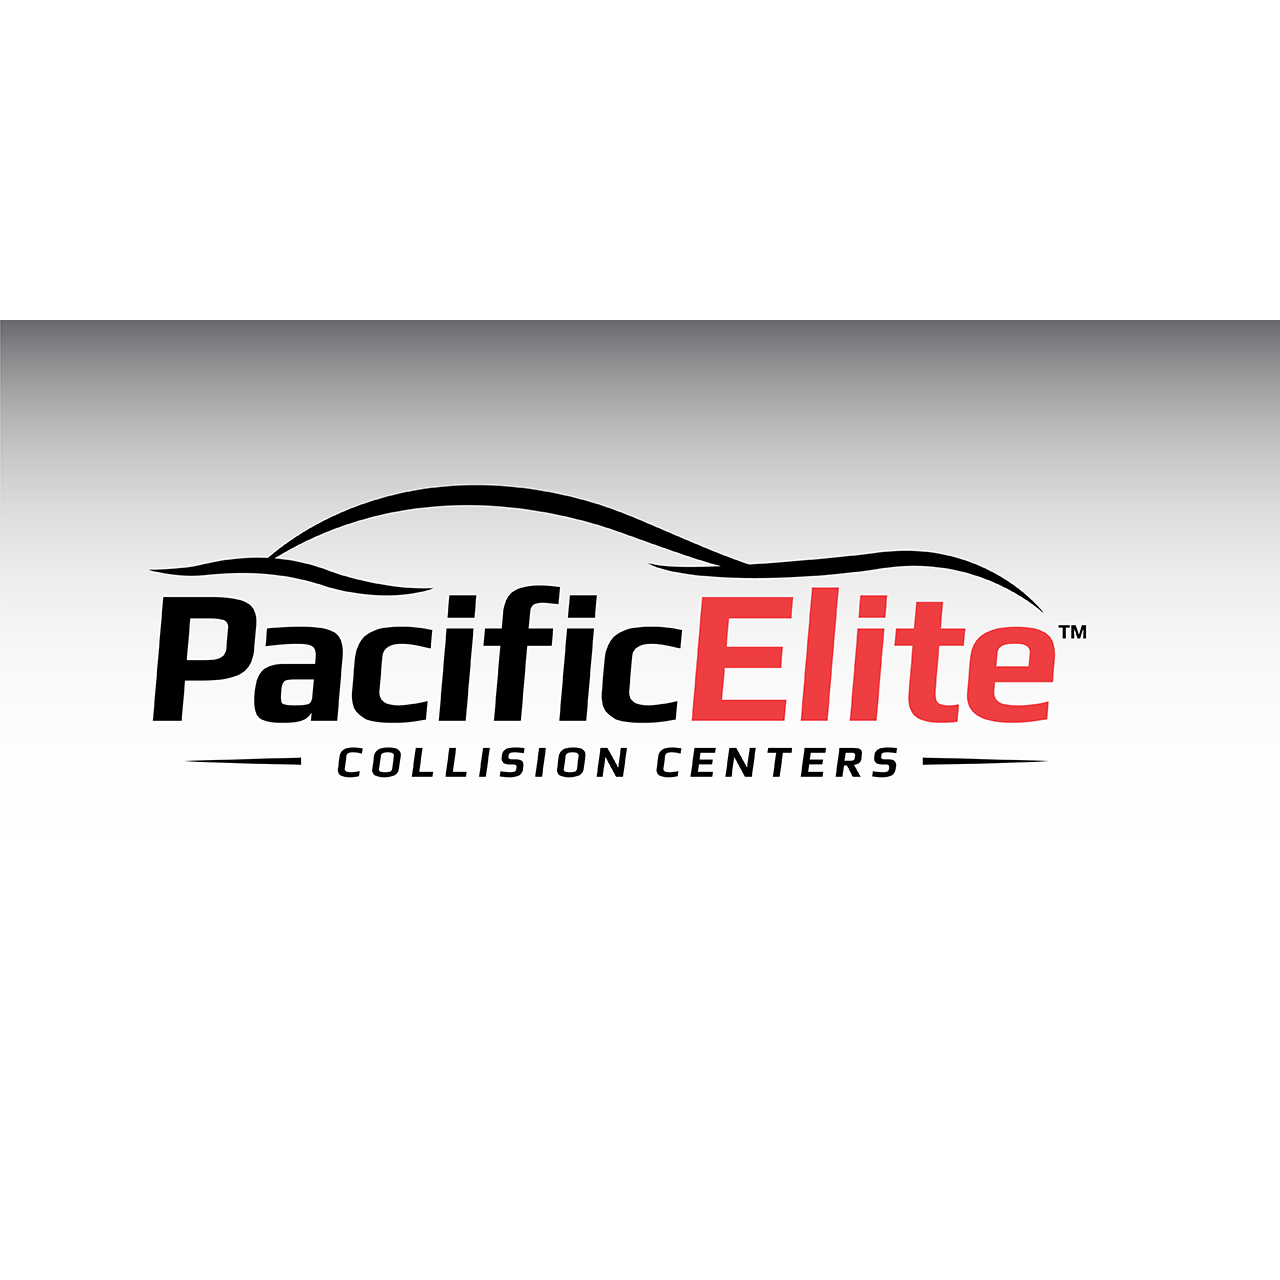 Pacific Elite Collision Centers - Downey East Logo